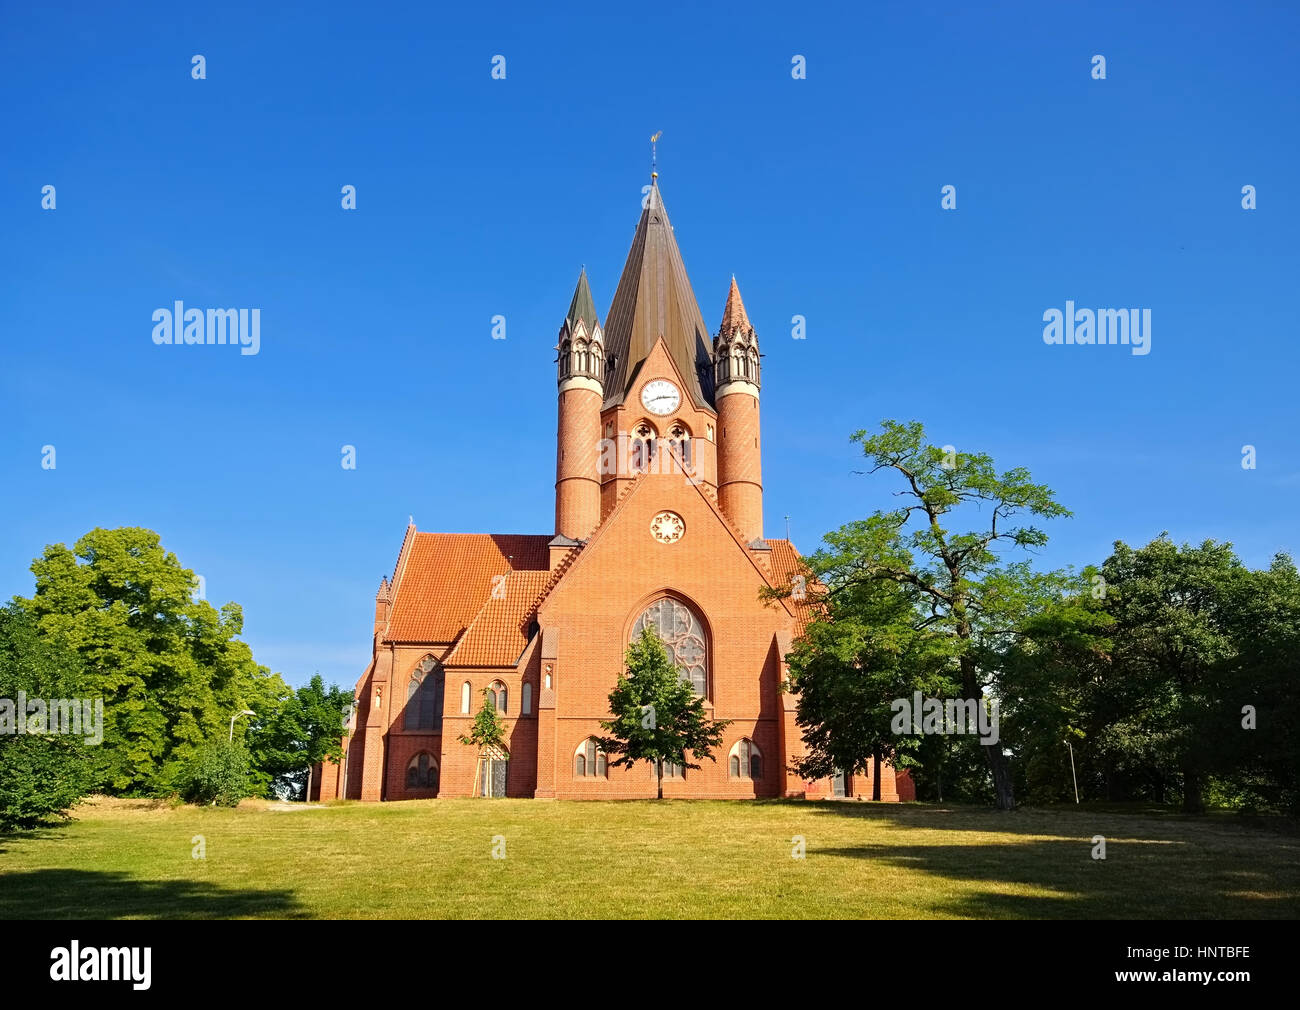 Halle Pauluskirche - Halle, il Paulus-Church chiesa protestante in mattoni in stile gothik Foto Stock